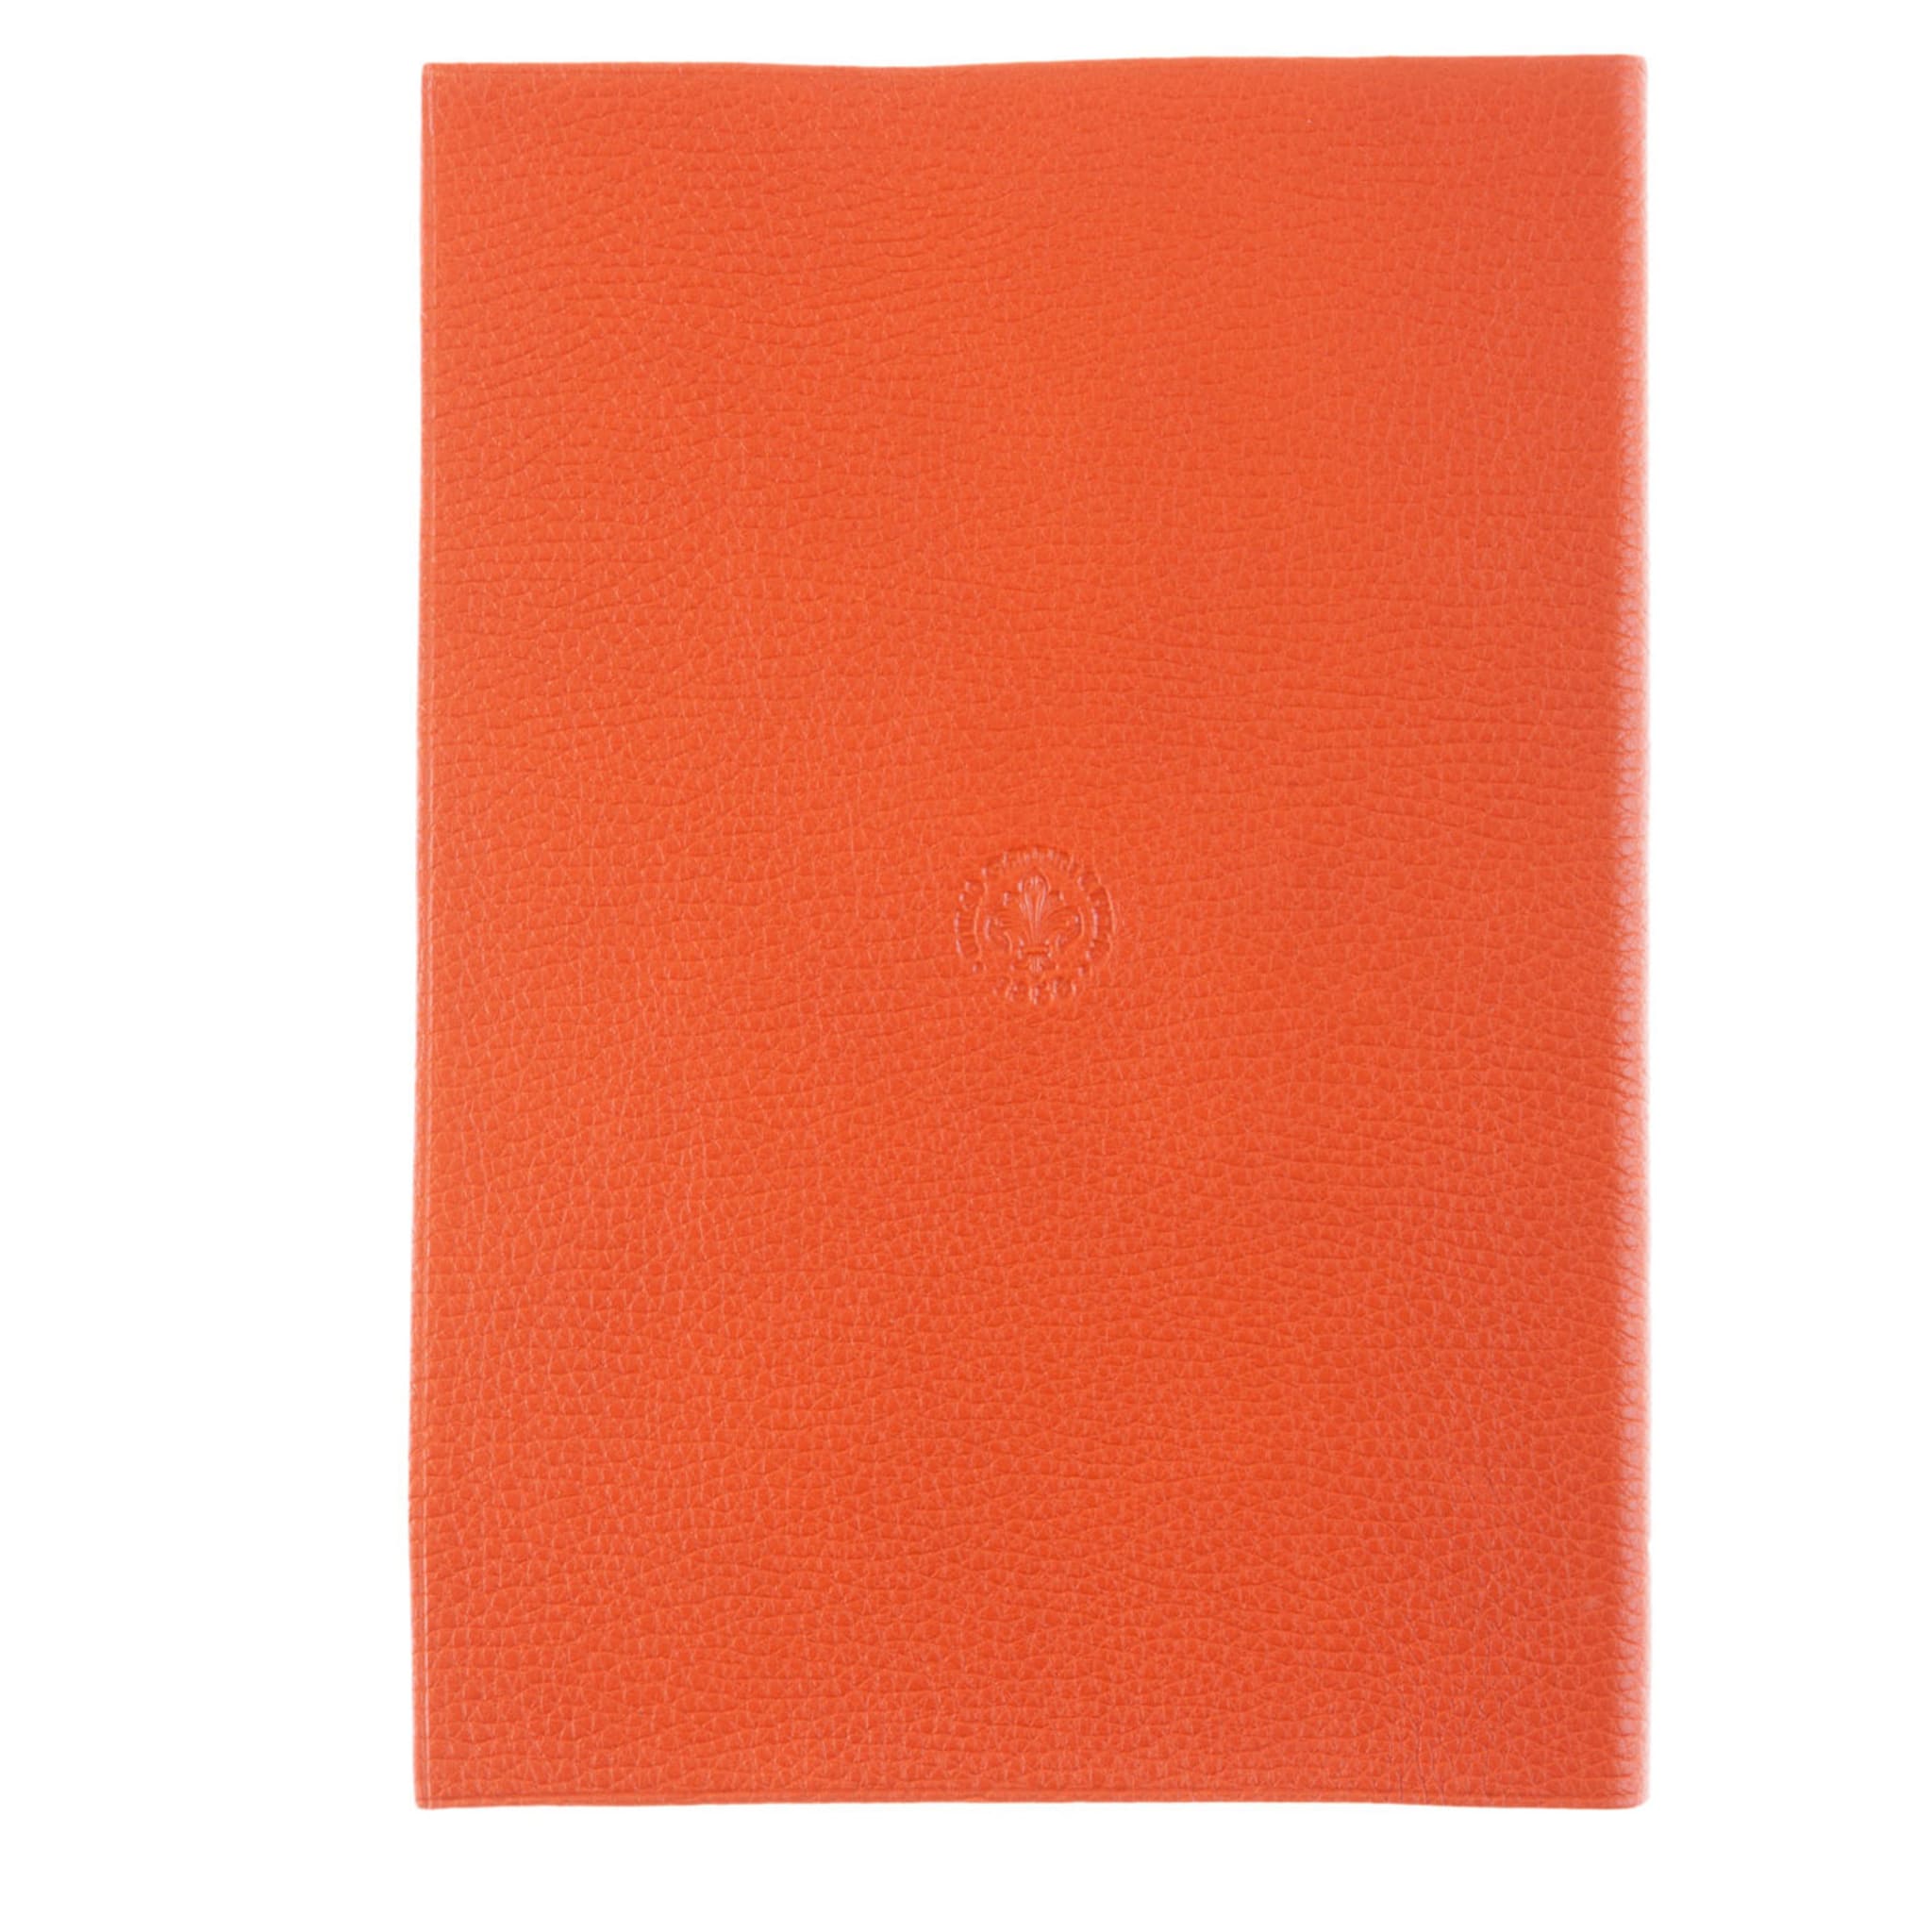 Orange Leather Notebook - Alternative view 2